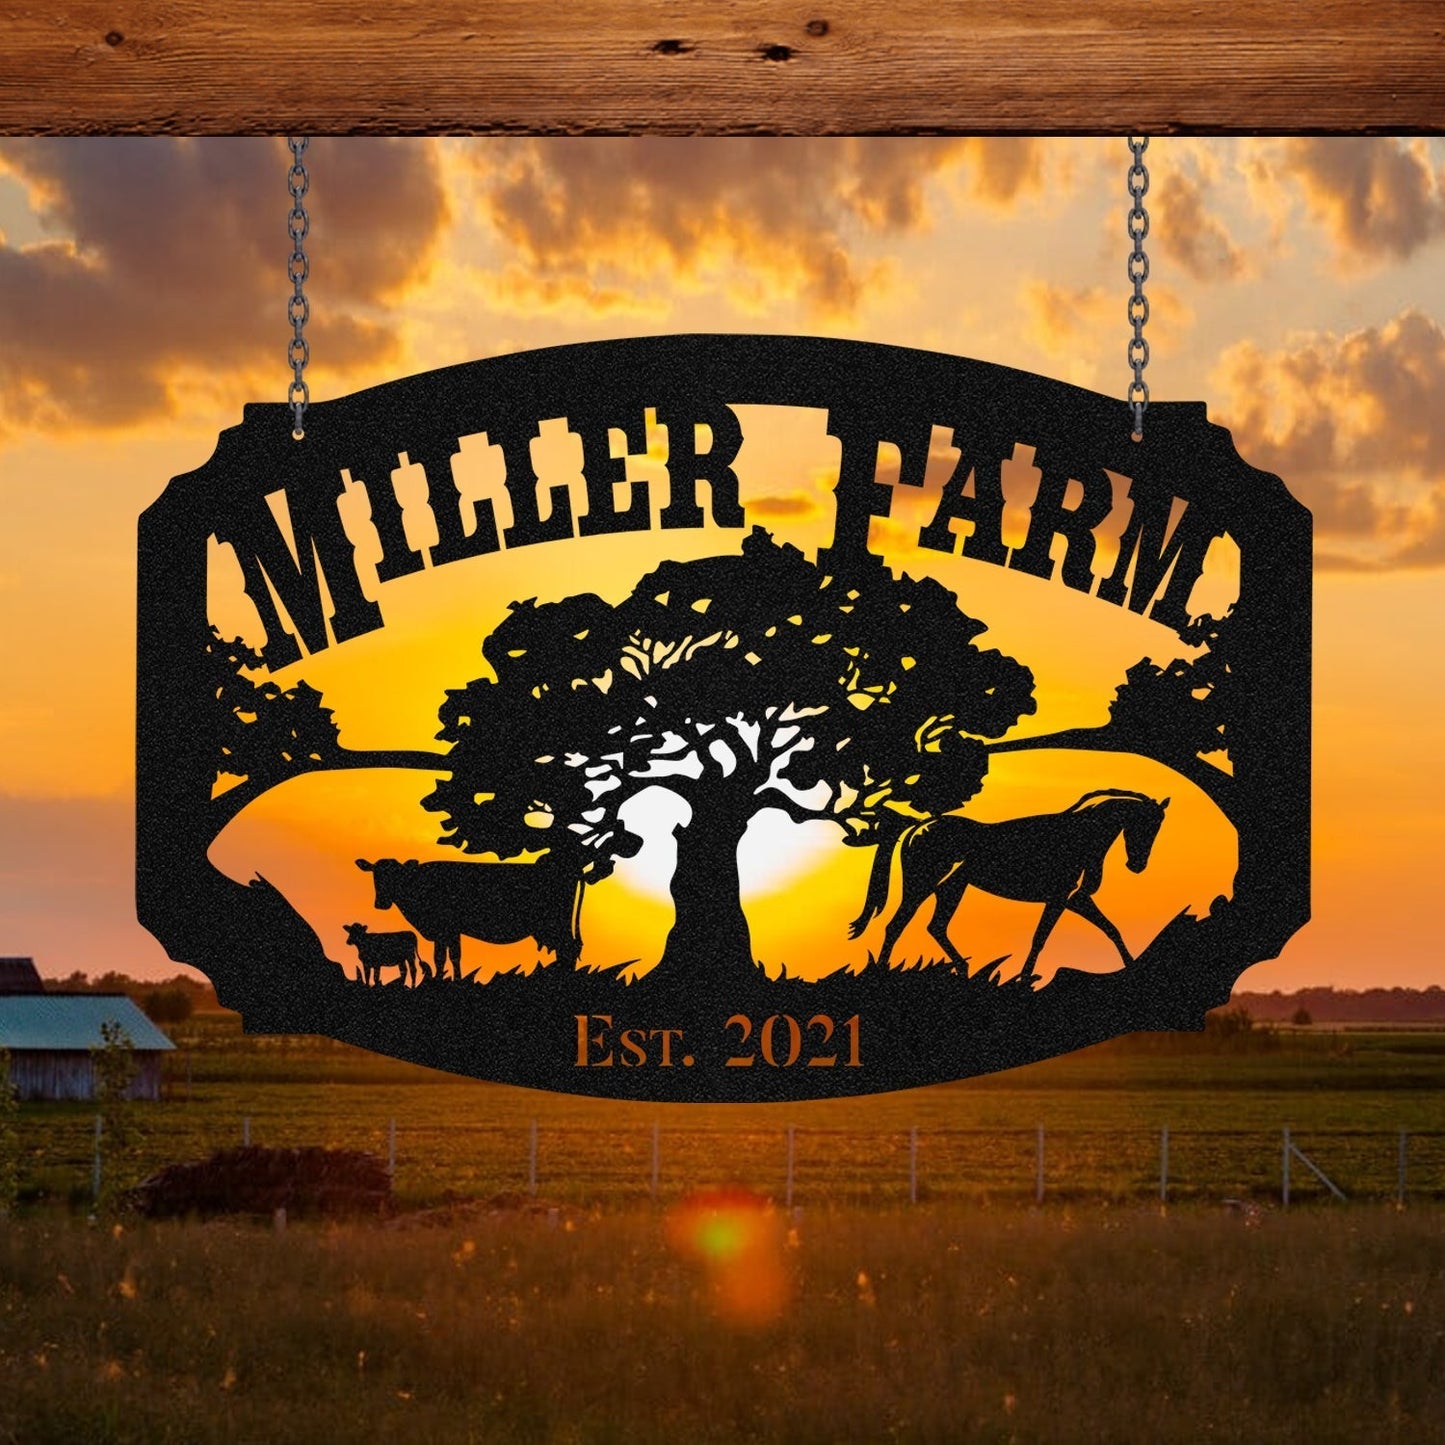 Personalized Metal Farm Sign Horse Cow Monogram Custom Outdoor Farmhouse Ranch Stable Barn Wall Decor Art Gift